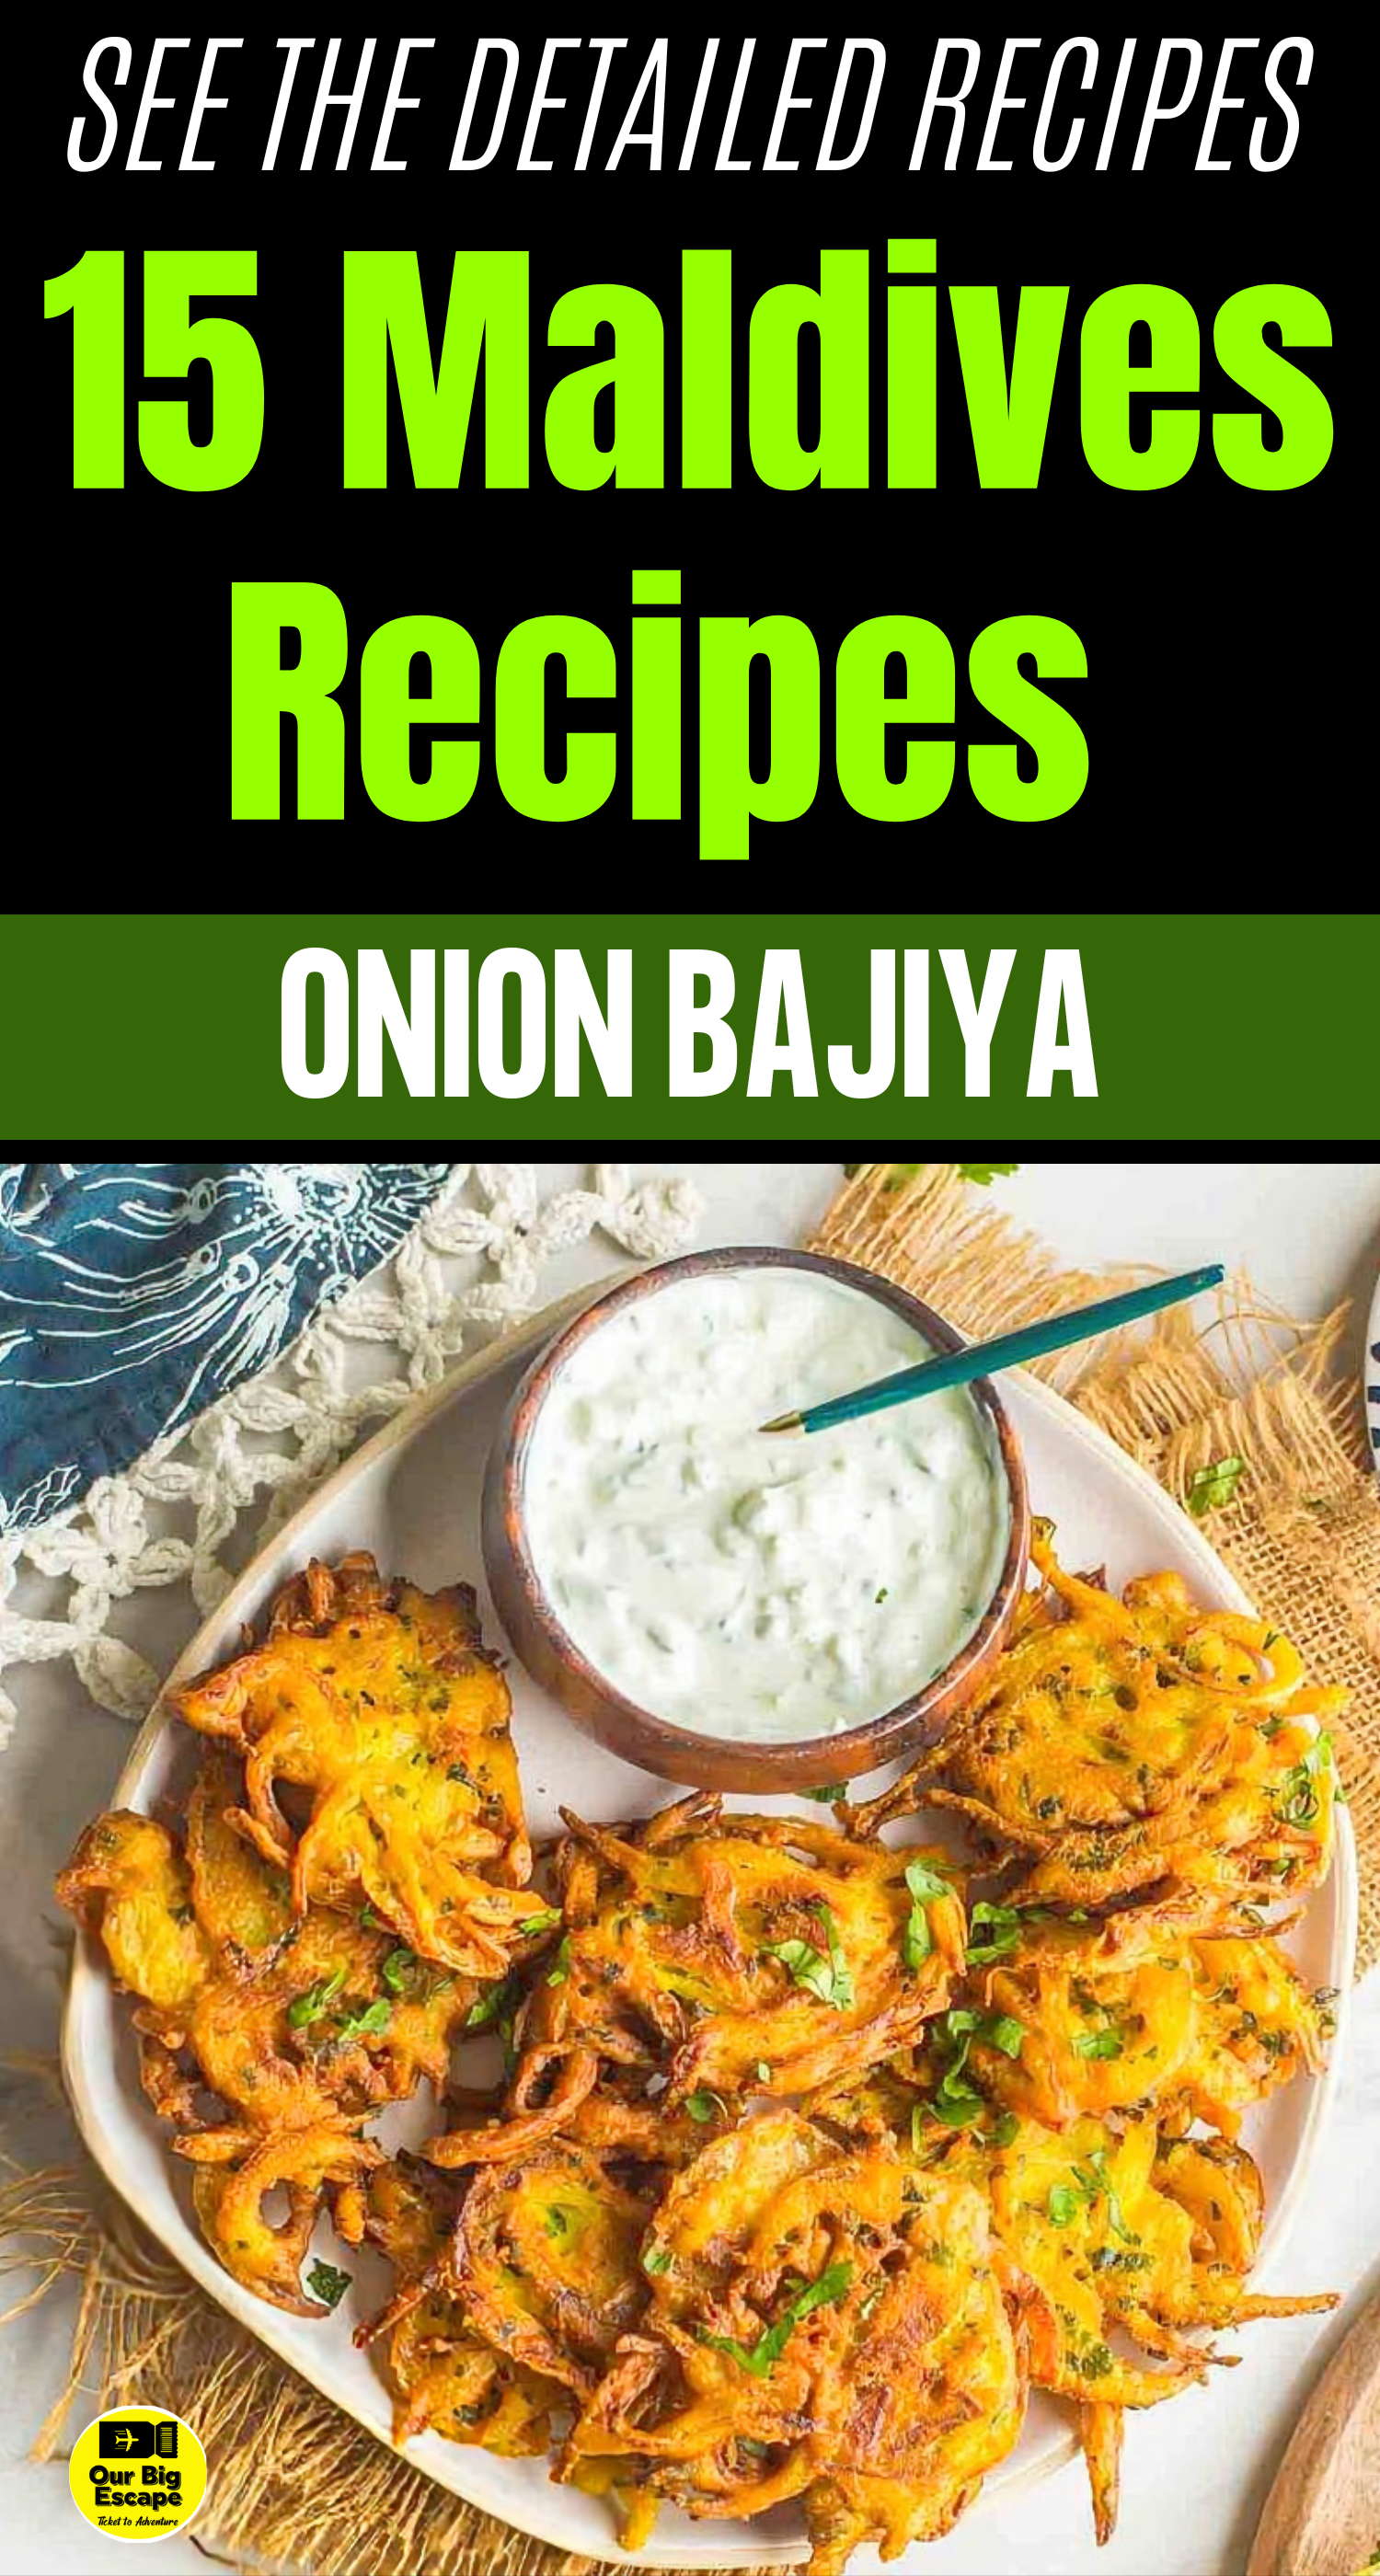 15 Maldives Recipes - Onion Bajiya